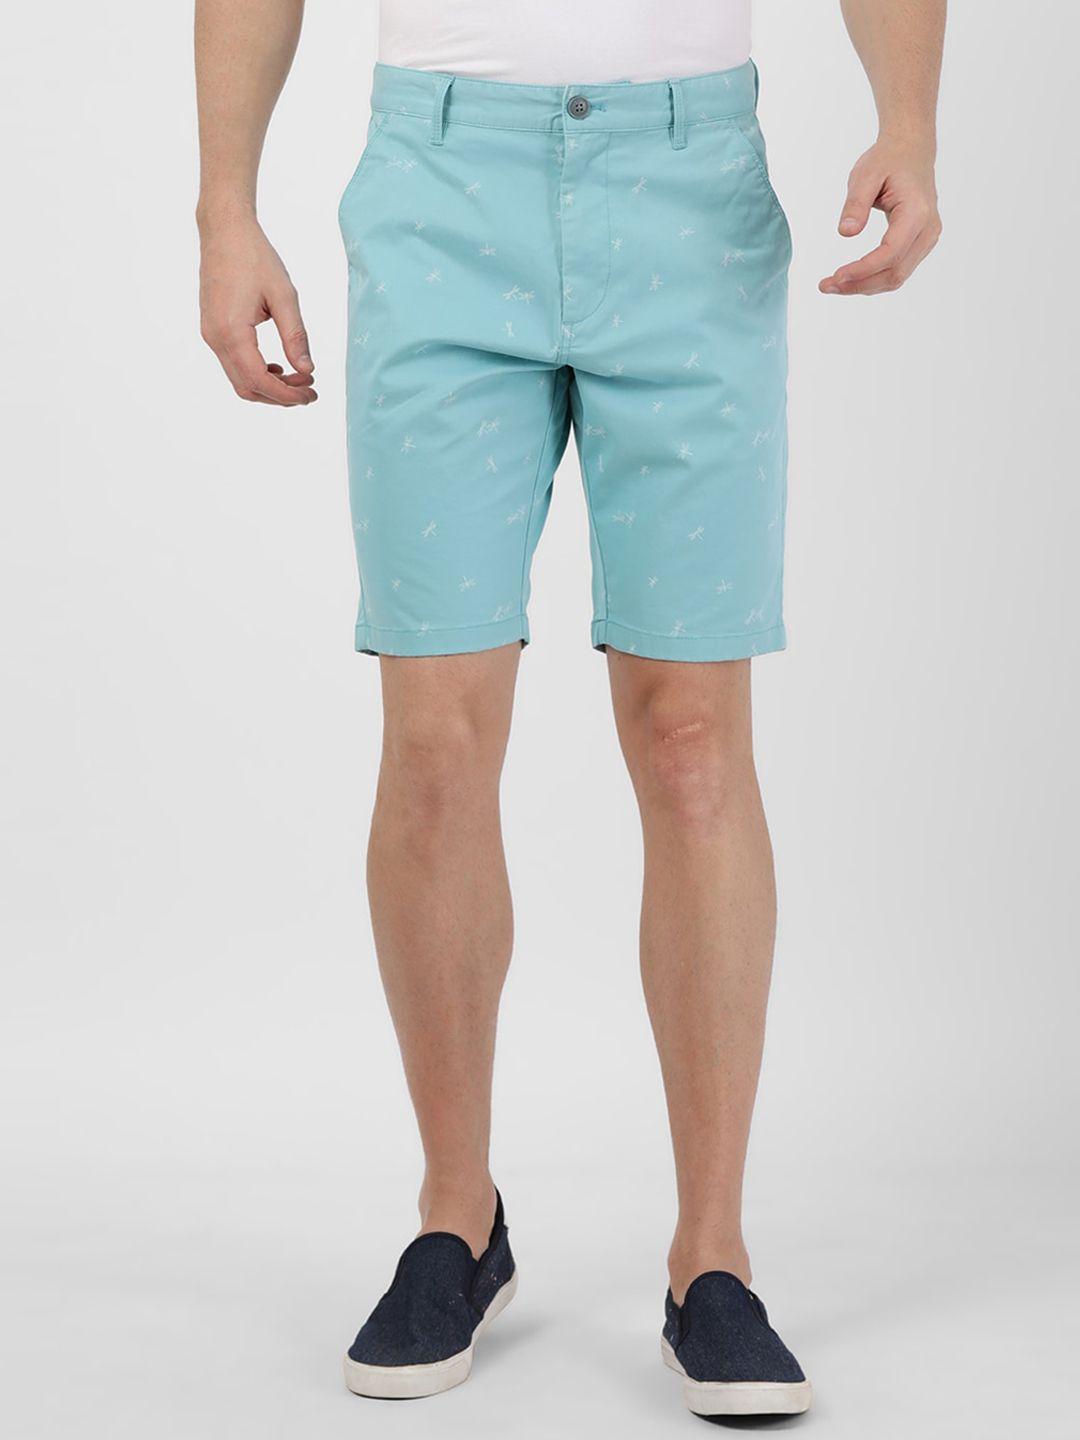 t-base men conversational printed mid rise cotton chino shorts